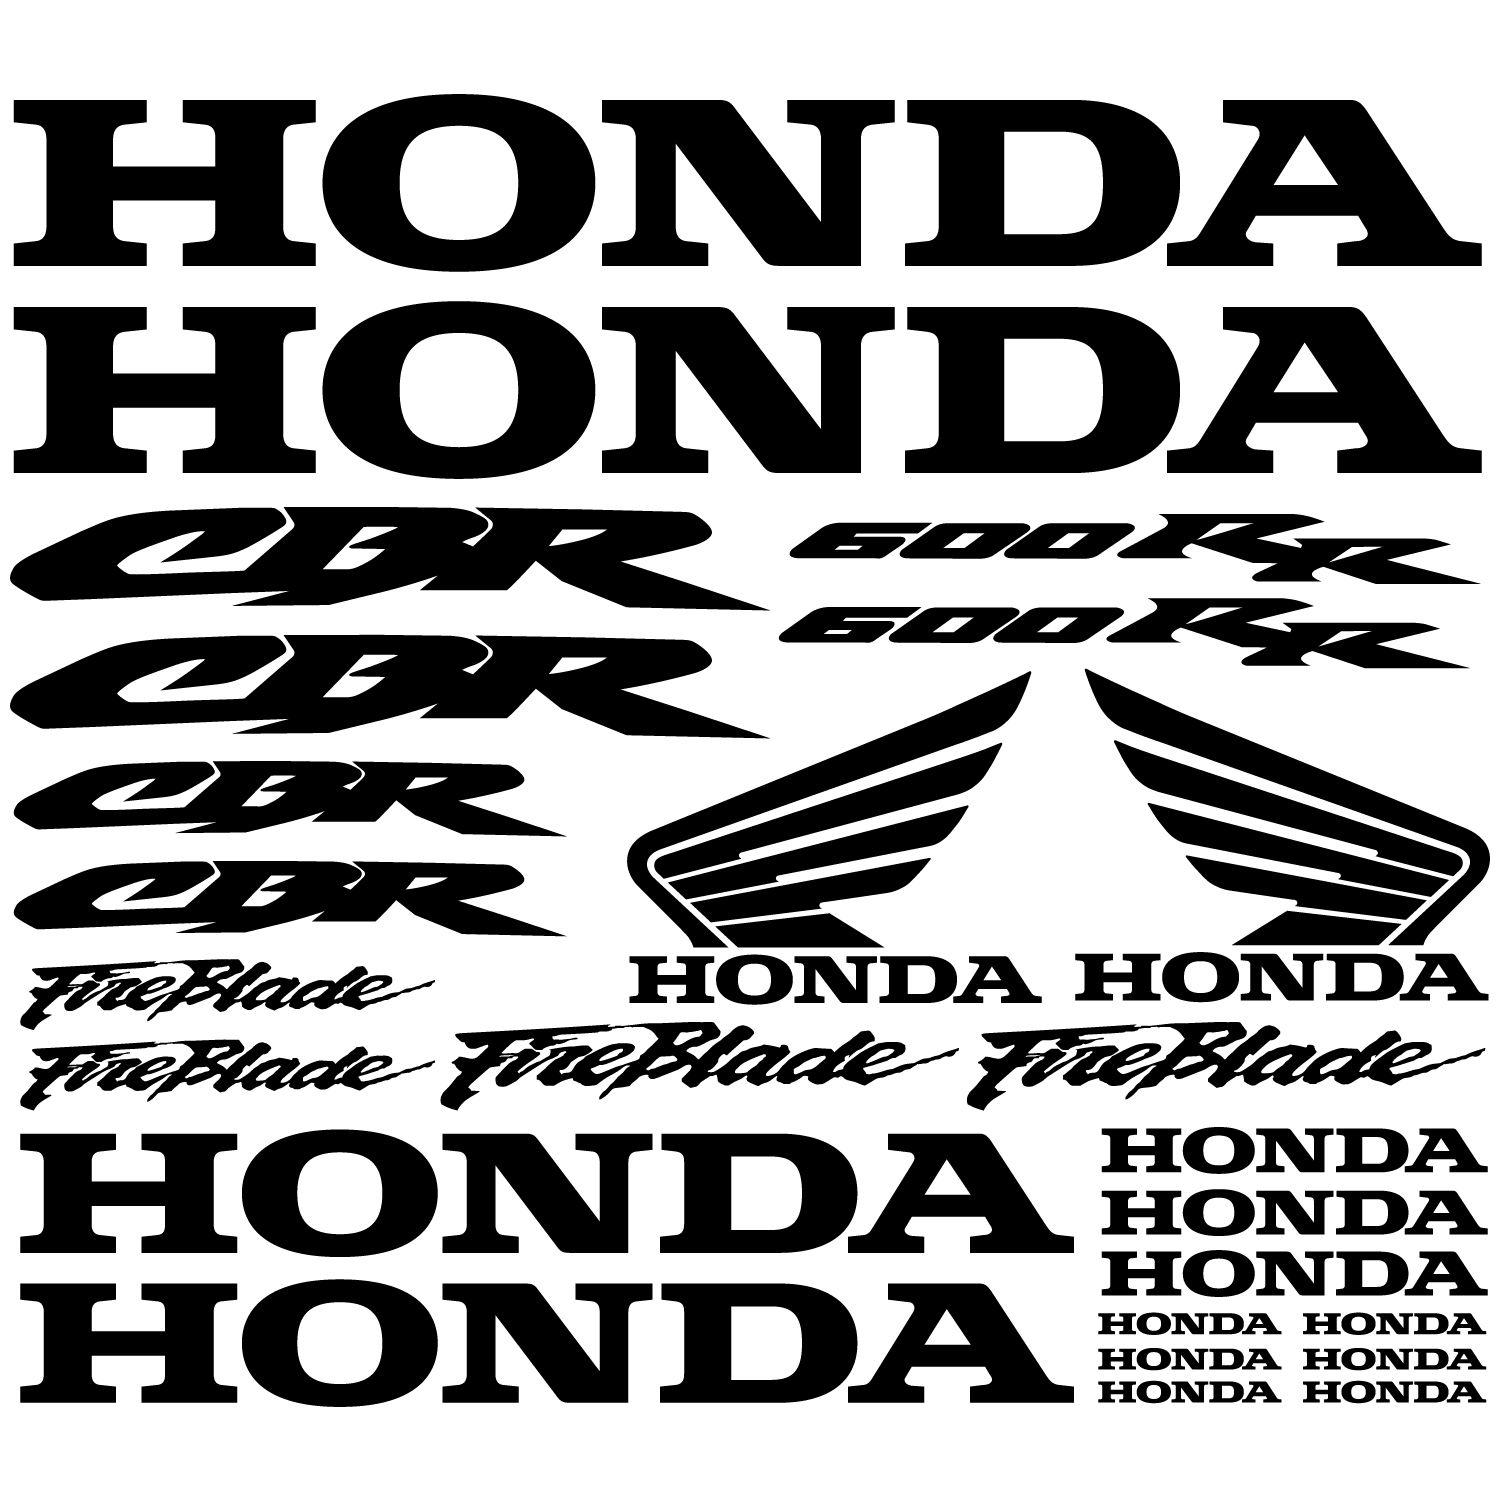 CBR 600 RR Logo - Wallstickers folies : Honda cbr 600rr Decal Stickers kit